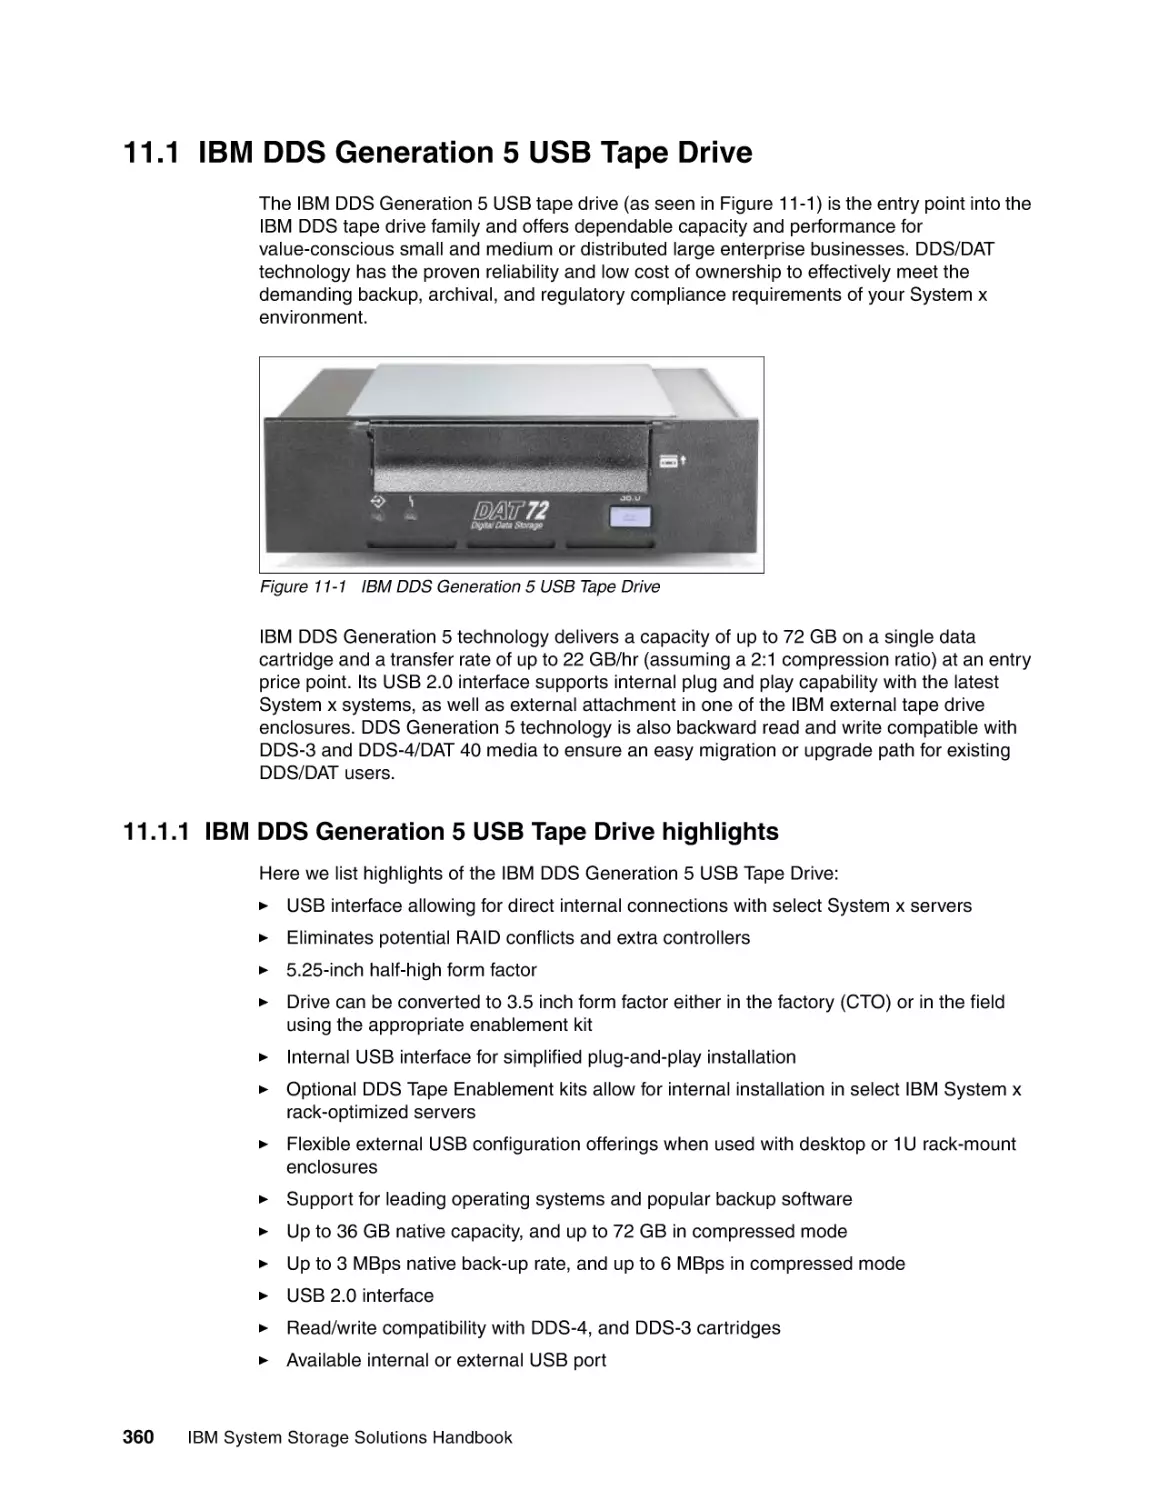 11.1 IBM DDS Generation 5 USB Tape Drive
11.1.1 IBM DDS Generation 5 USB Tape Drive highlights